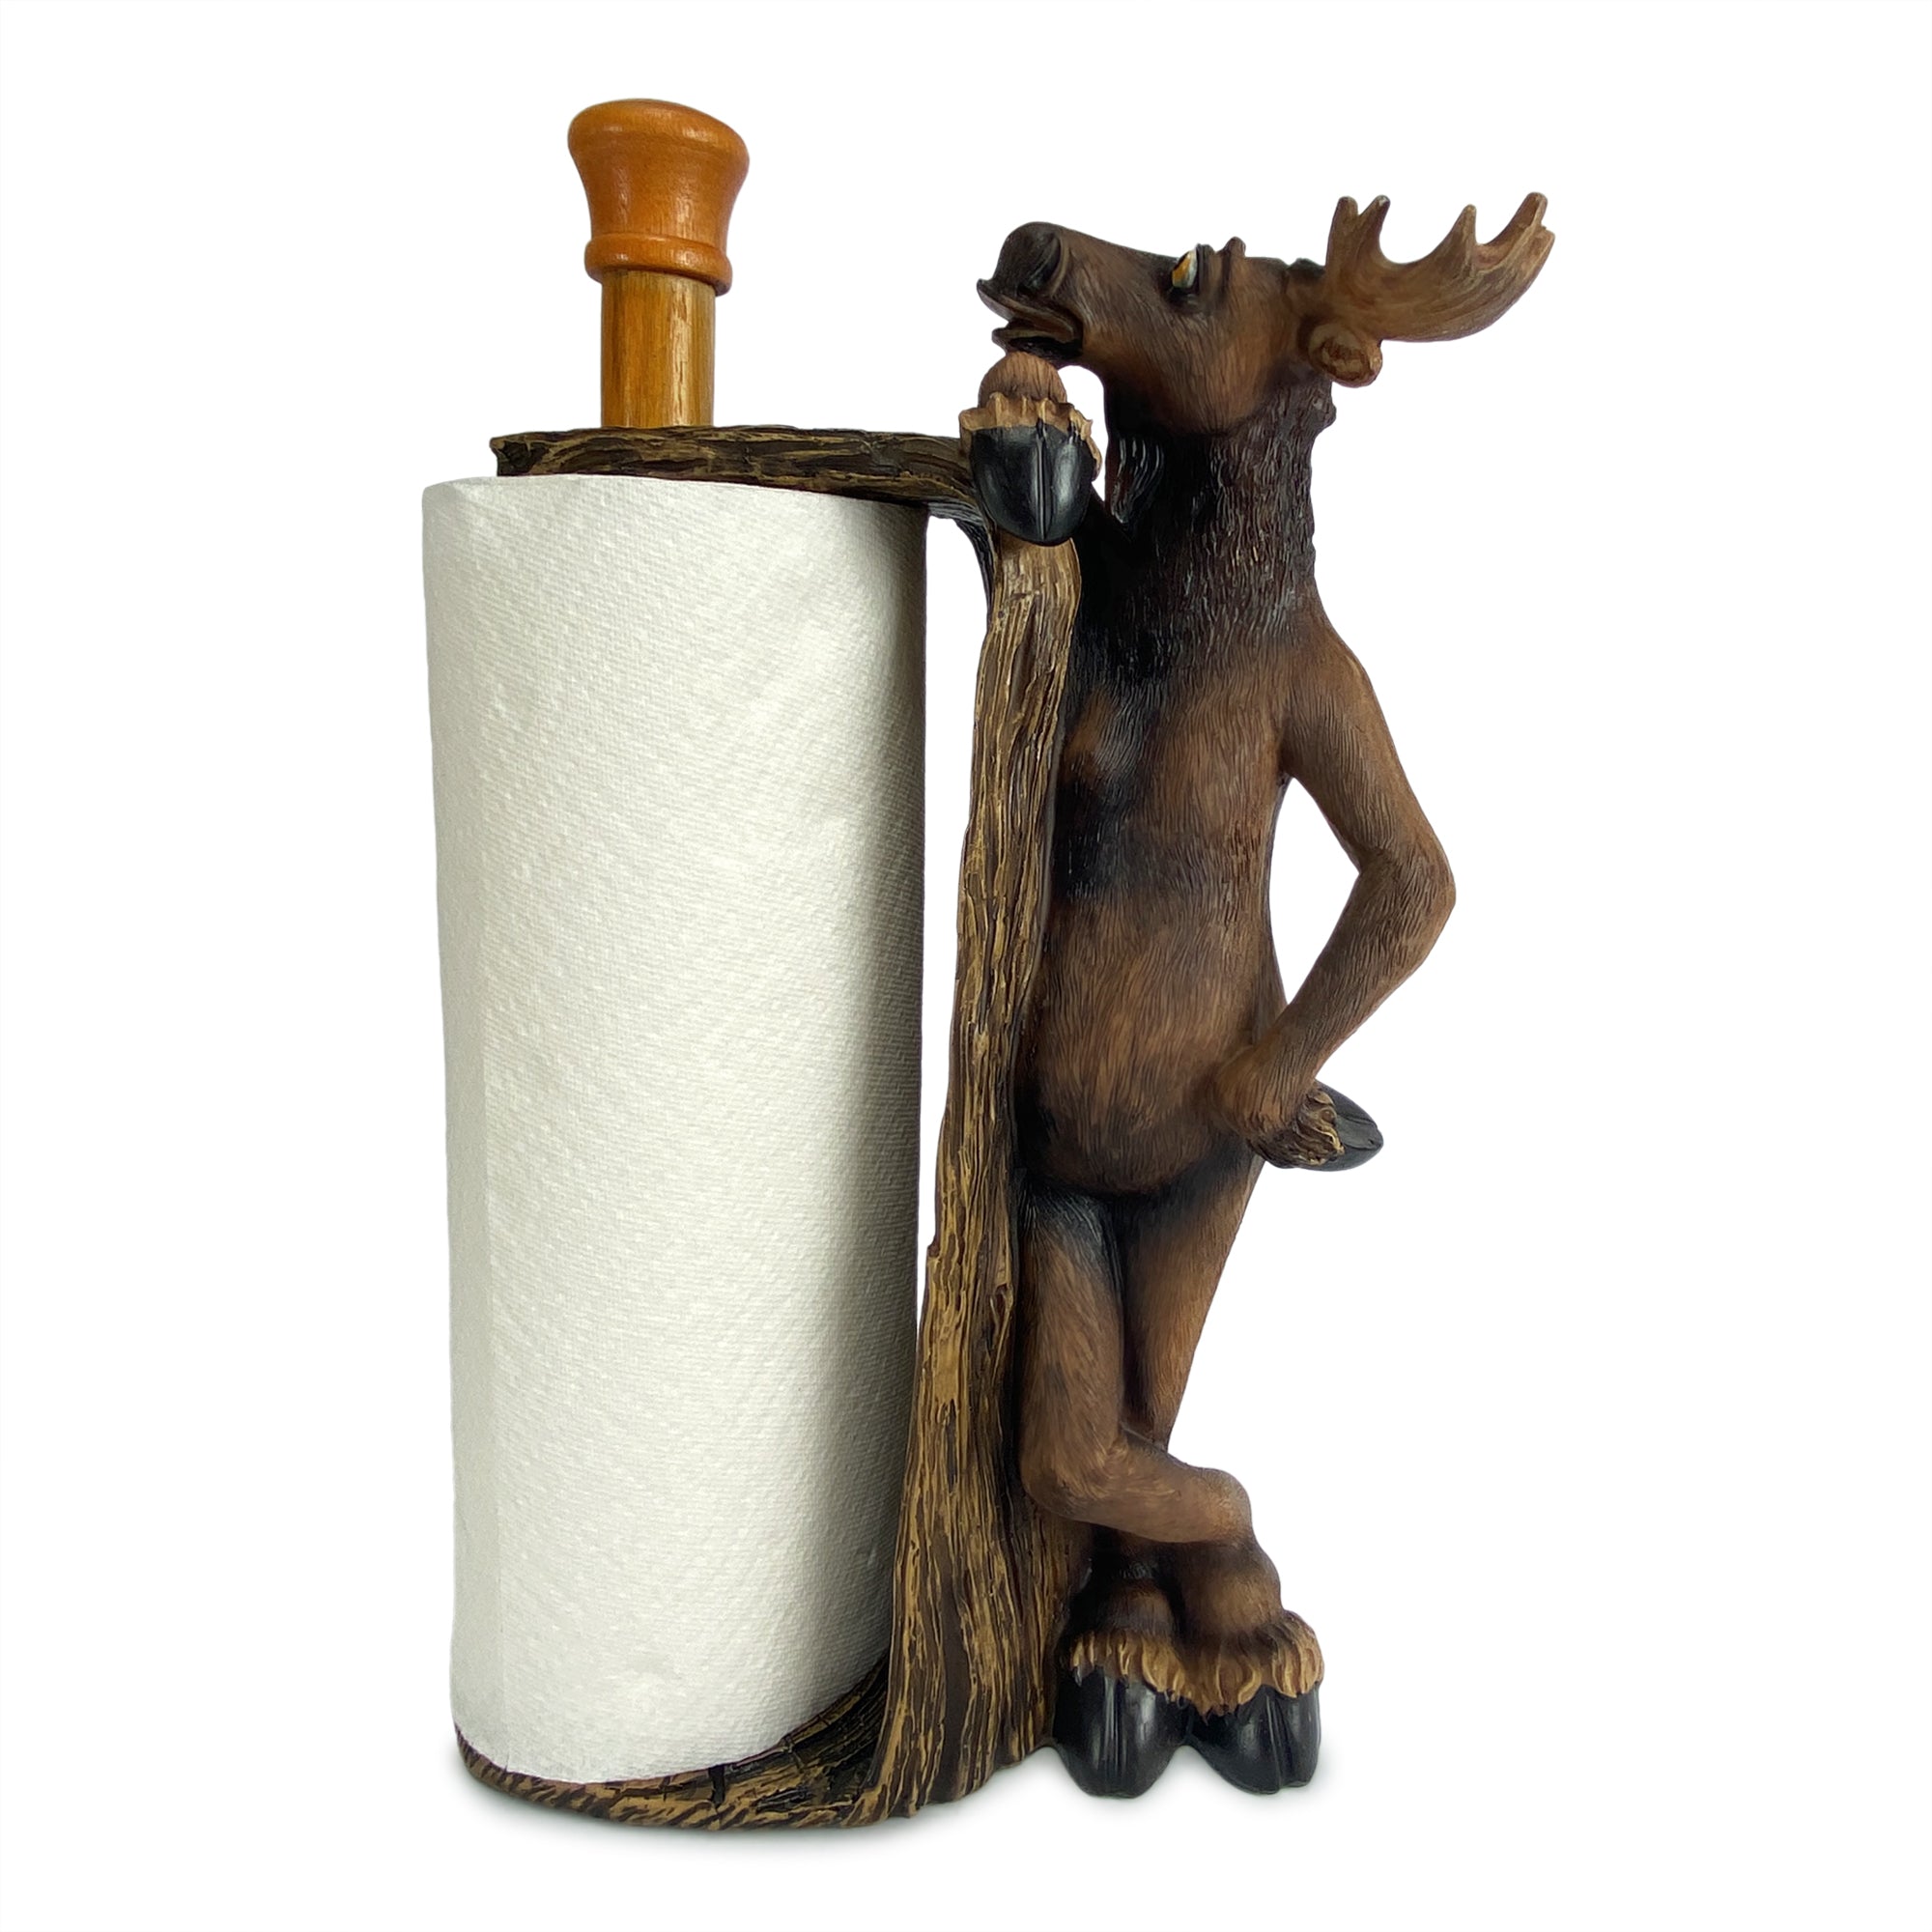 Deer Moose and Bear Kitchen Towels